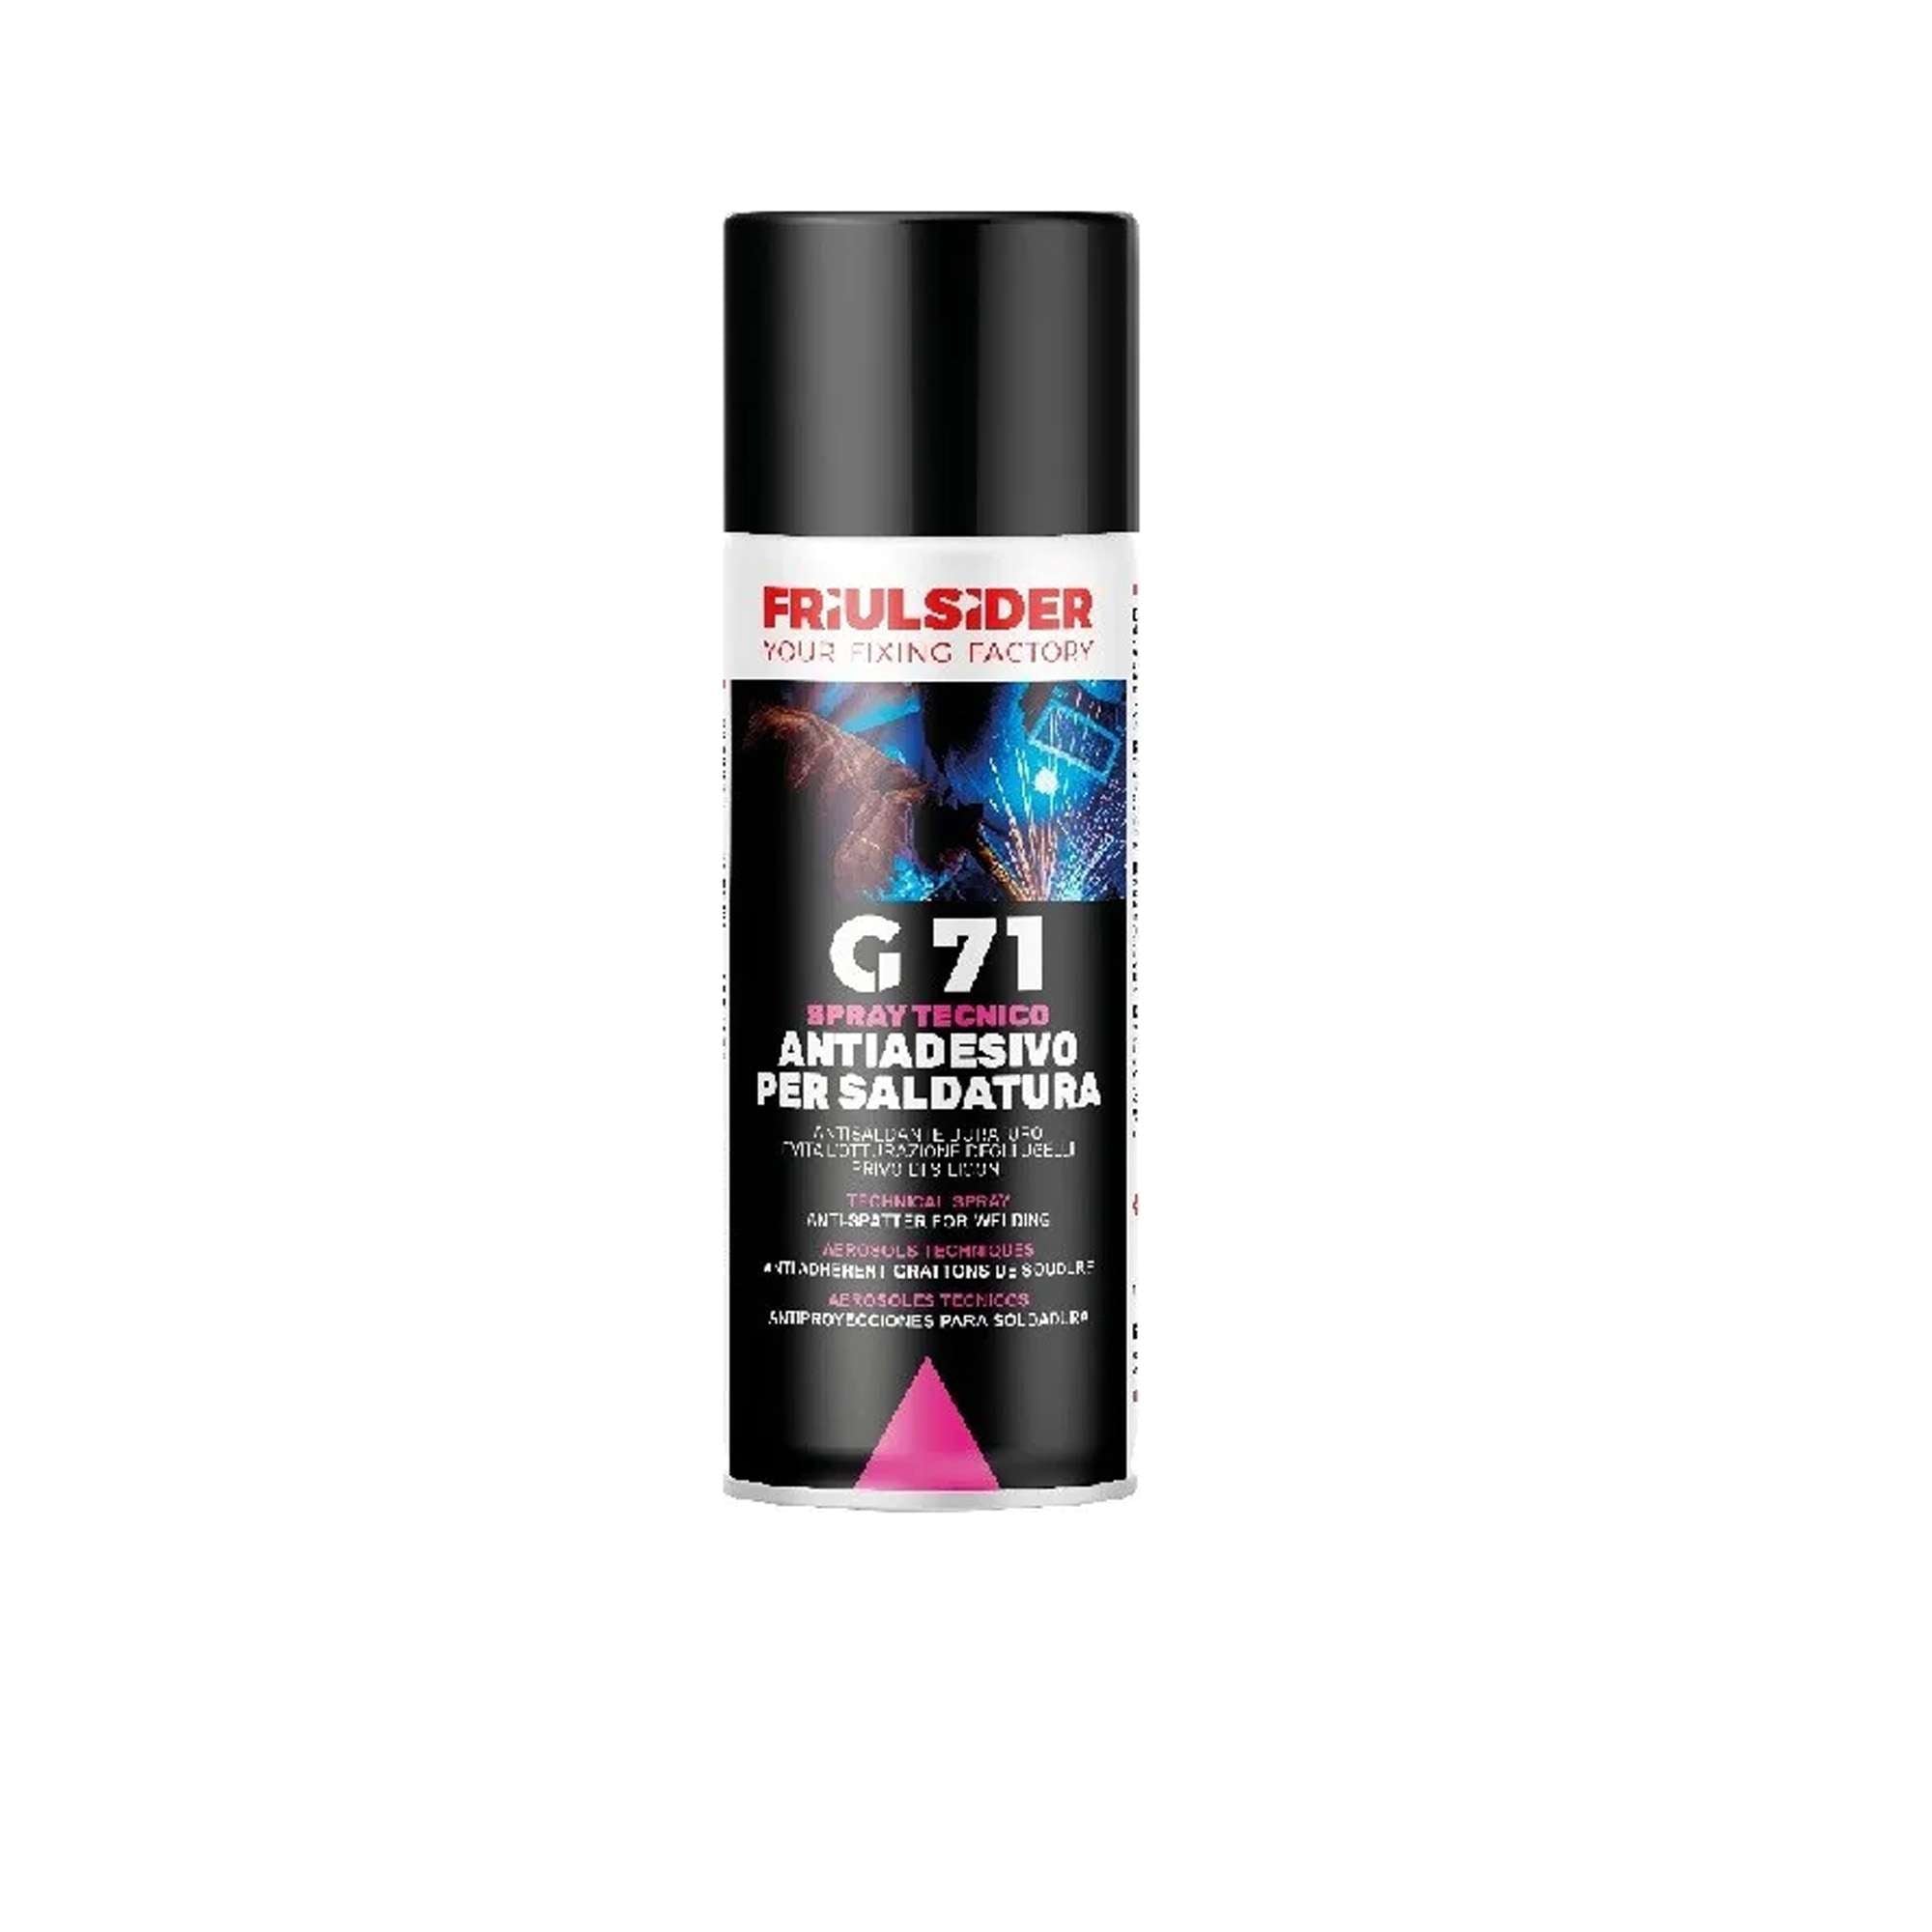 Spray tecnico antiadesivo per saldatura 400ml conf.12pz - G7100 Friulsider